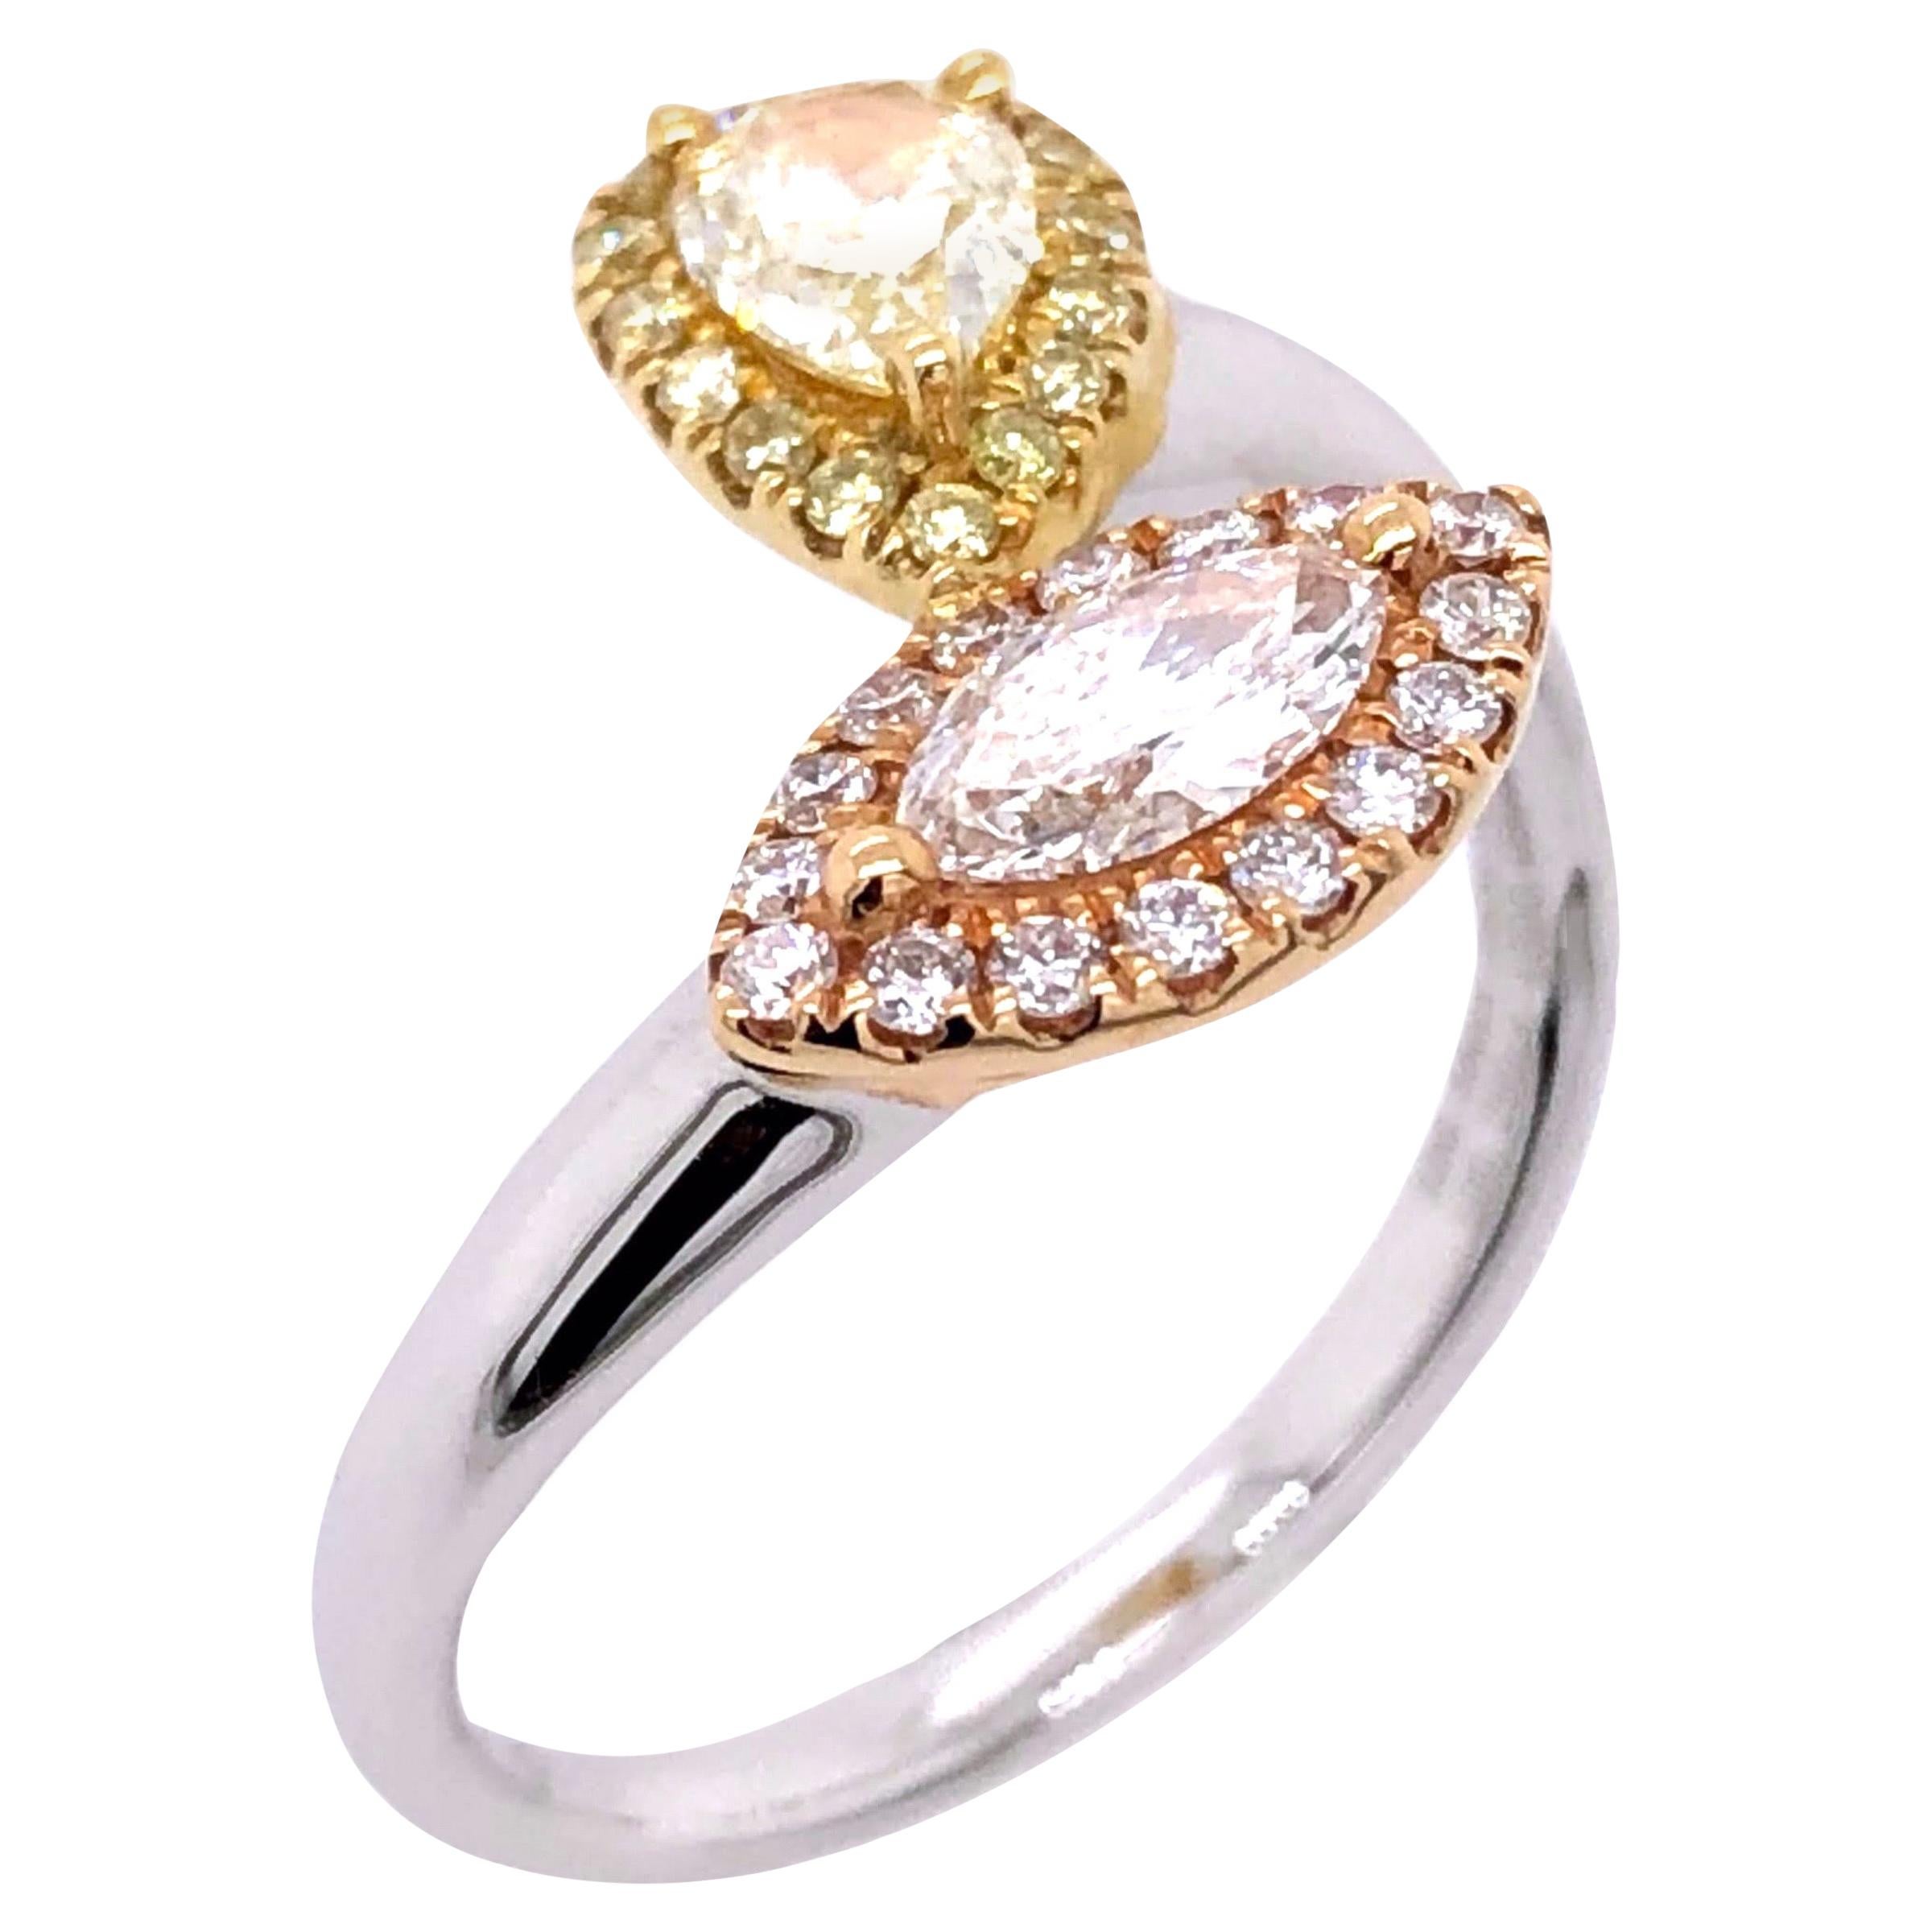 Paris Craft House Fancy Diamond Ring in 18 Karat White/Rose/Yellow Gold For Sale